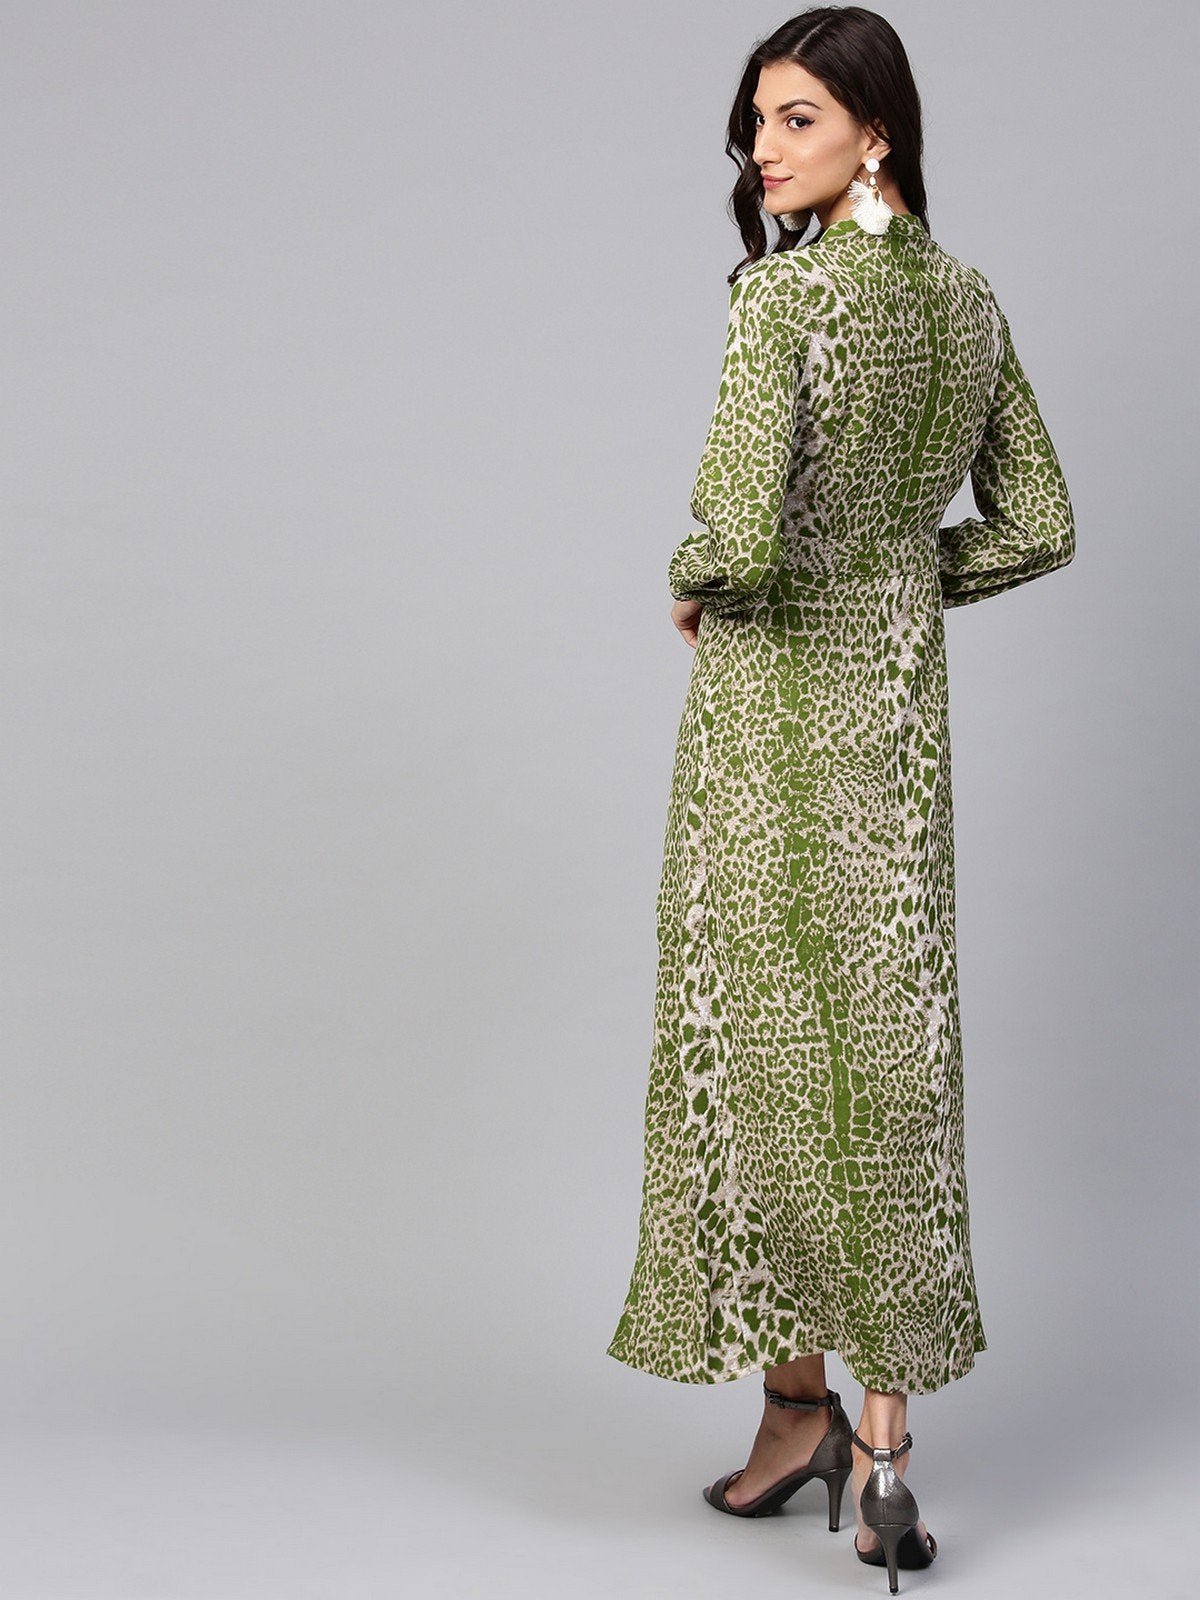 Women's Light Green Animal Print Maxi Dress With Embellished Brotch - Pannkh